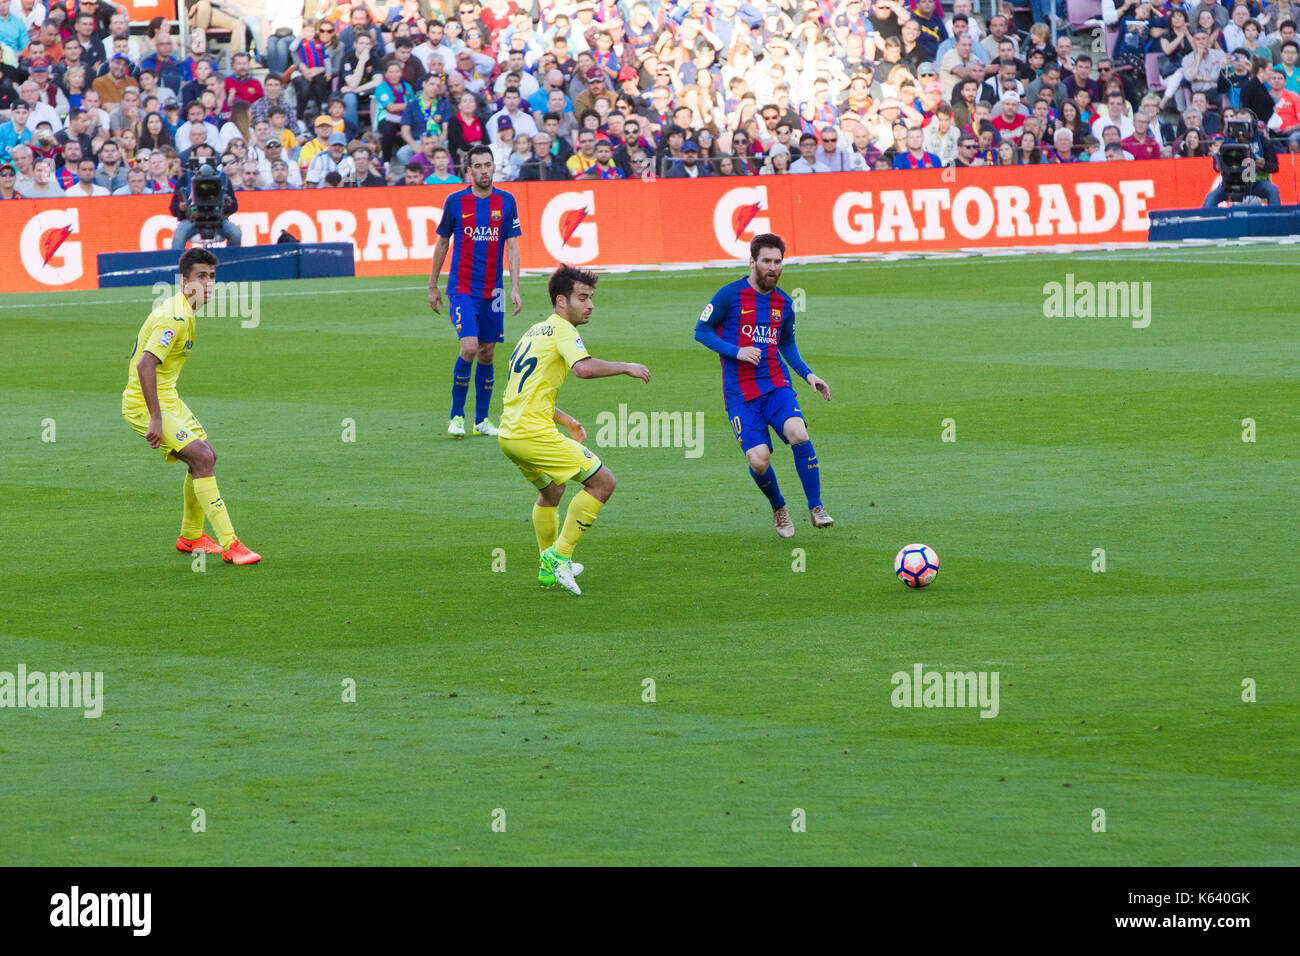 6/5/17 Barcelona gegen Villarreal Fußball-Liga Match im Camp Nou, Barcelona. Stockfoto